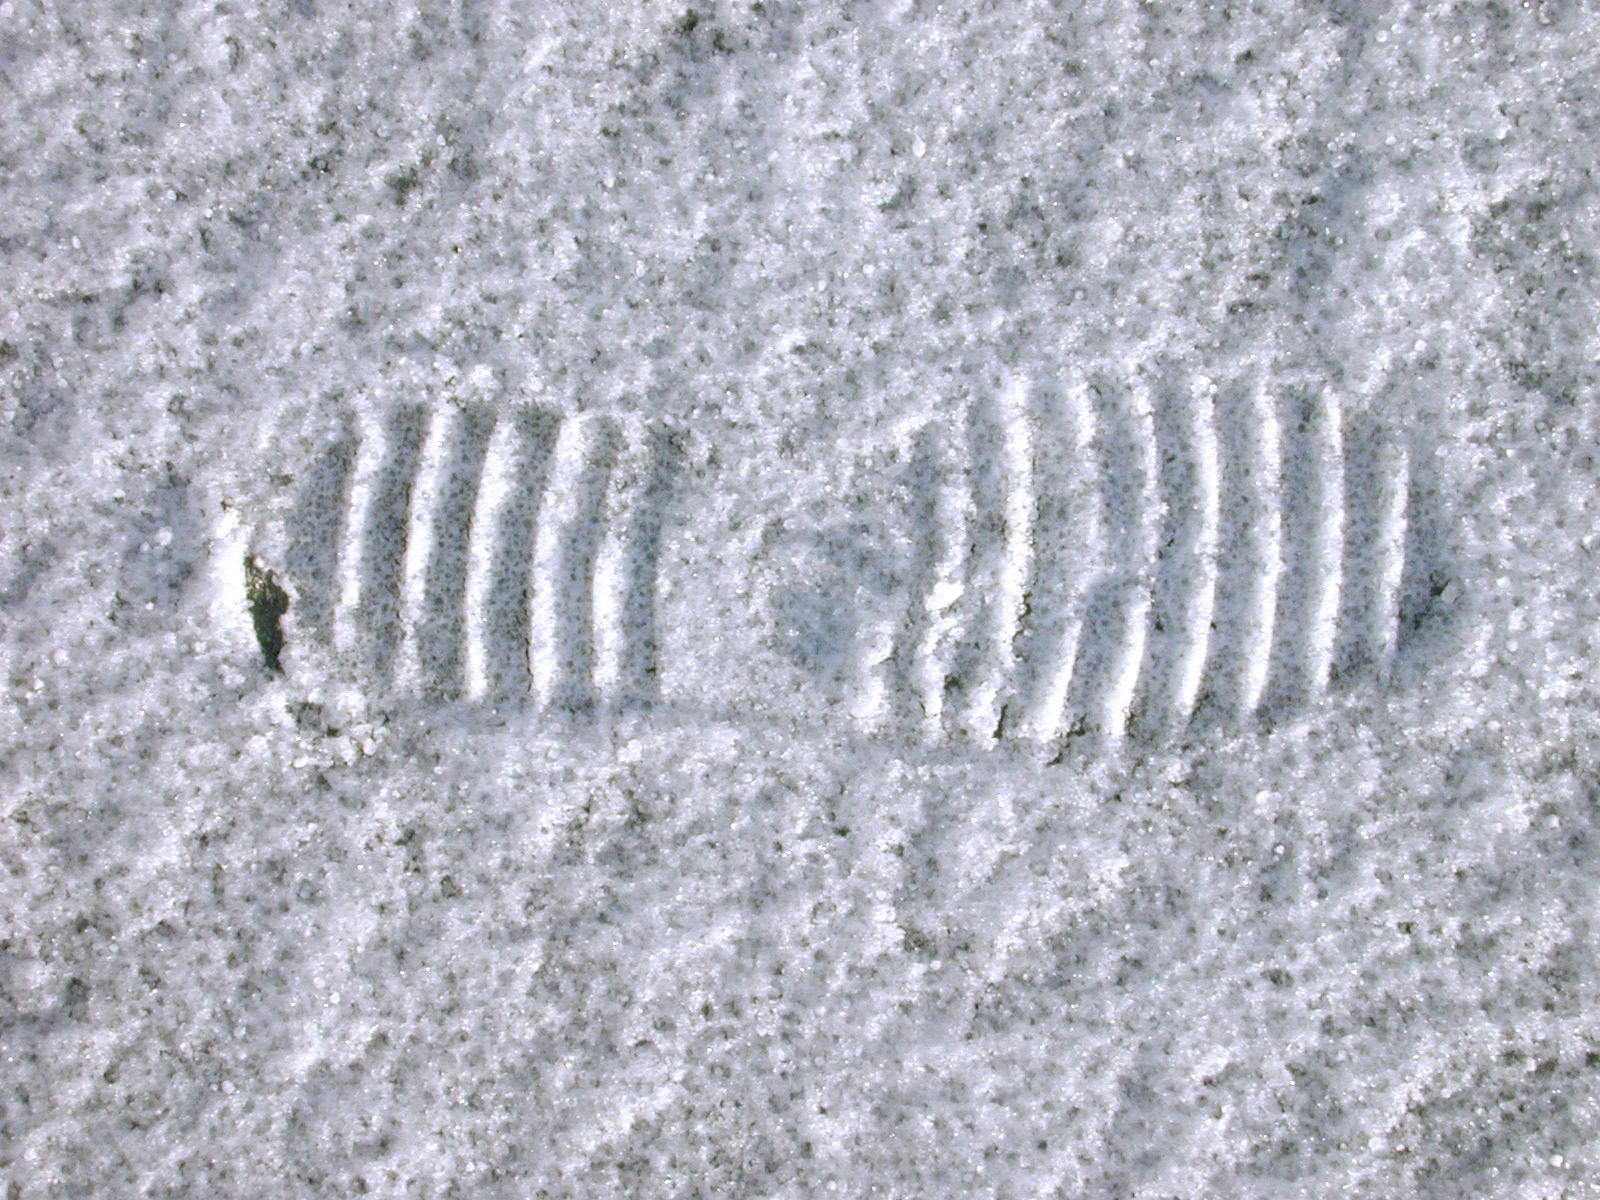 footprint moon snow manonthemoon man-on-the-moon hail sole shoe boot print foot winter walking walk freeze freezing ice frozen